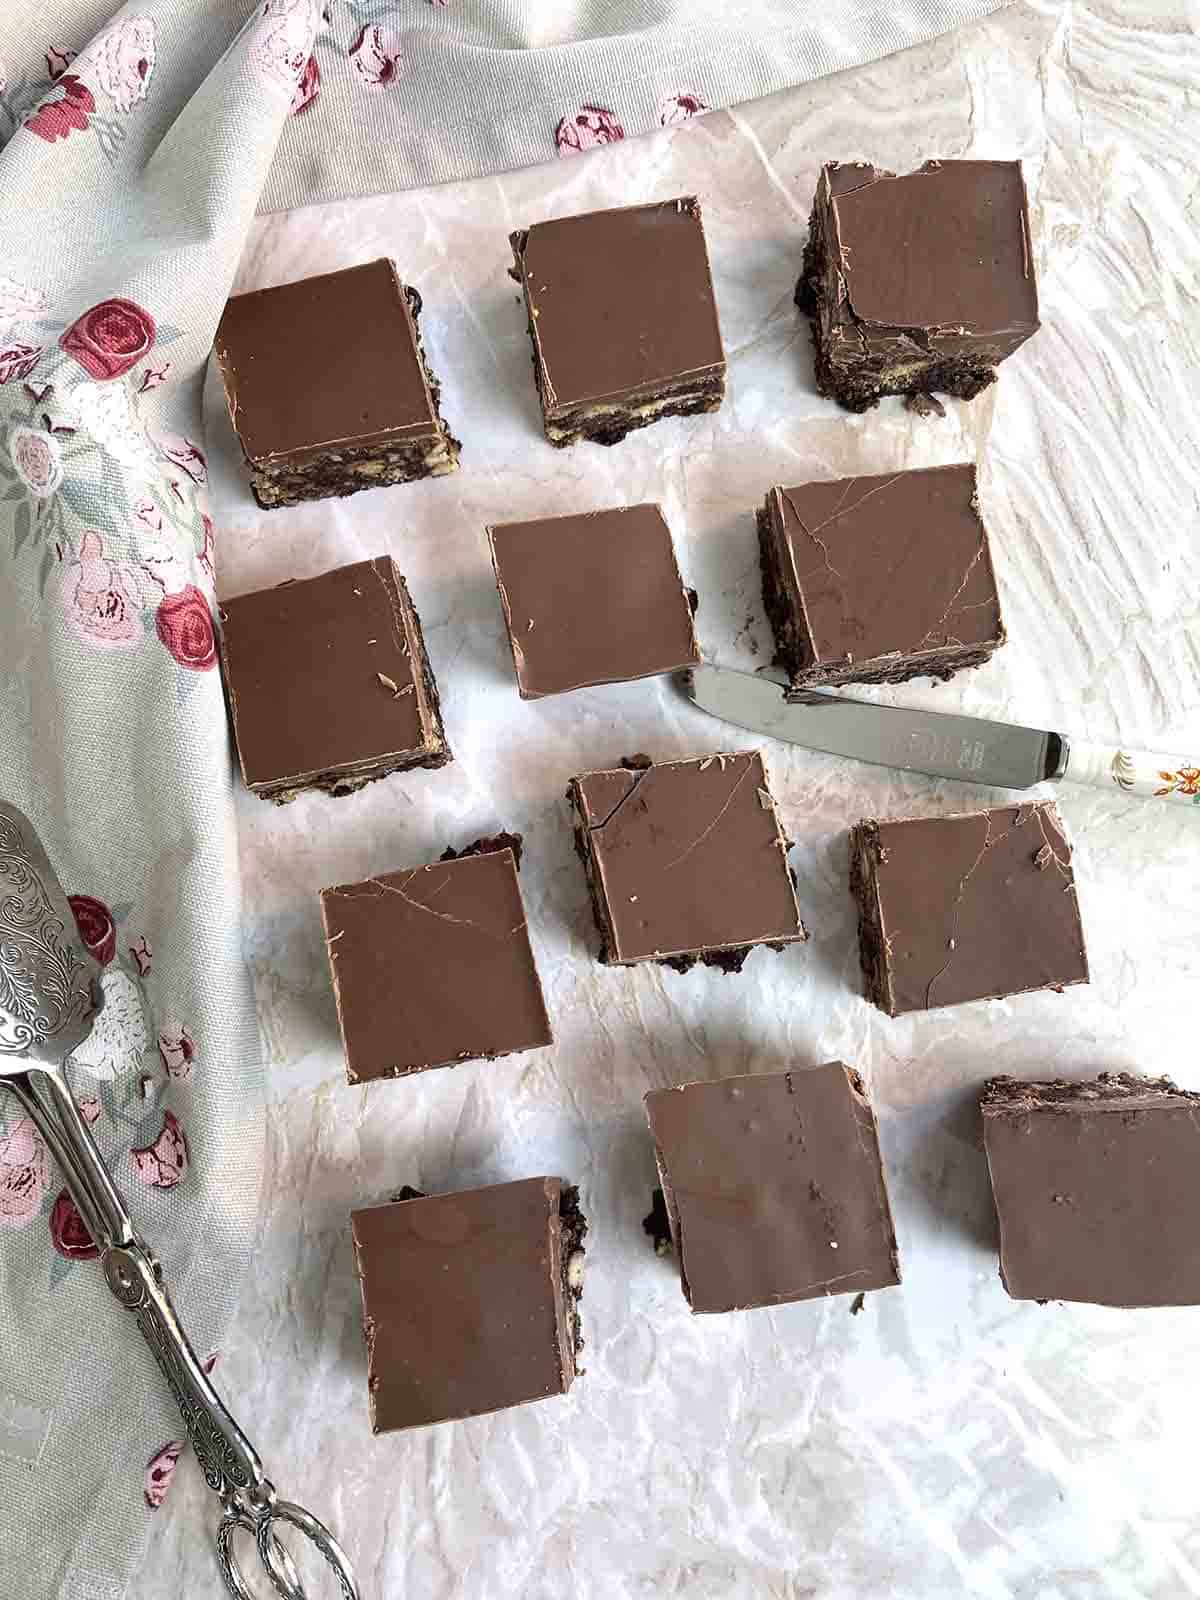 chocolate tiffin cut into squares.